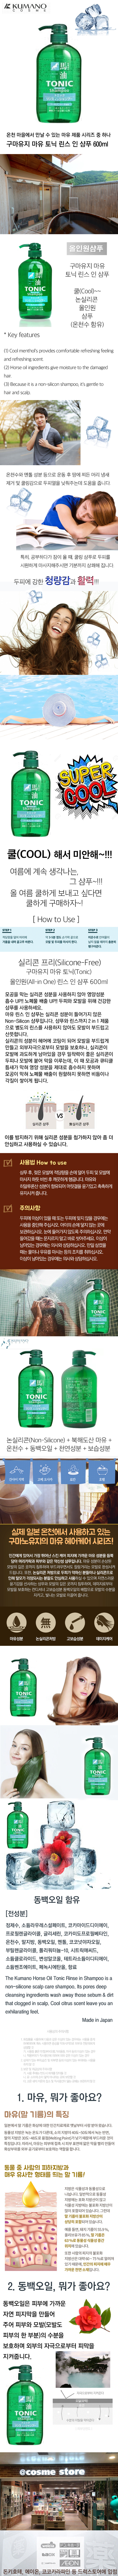 cool_shampoo_only.jpg